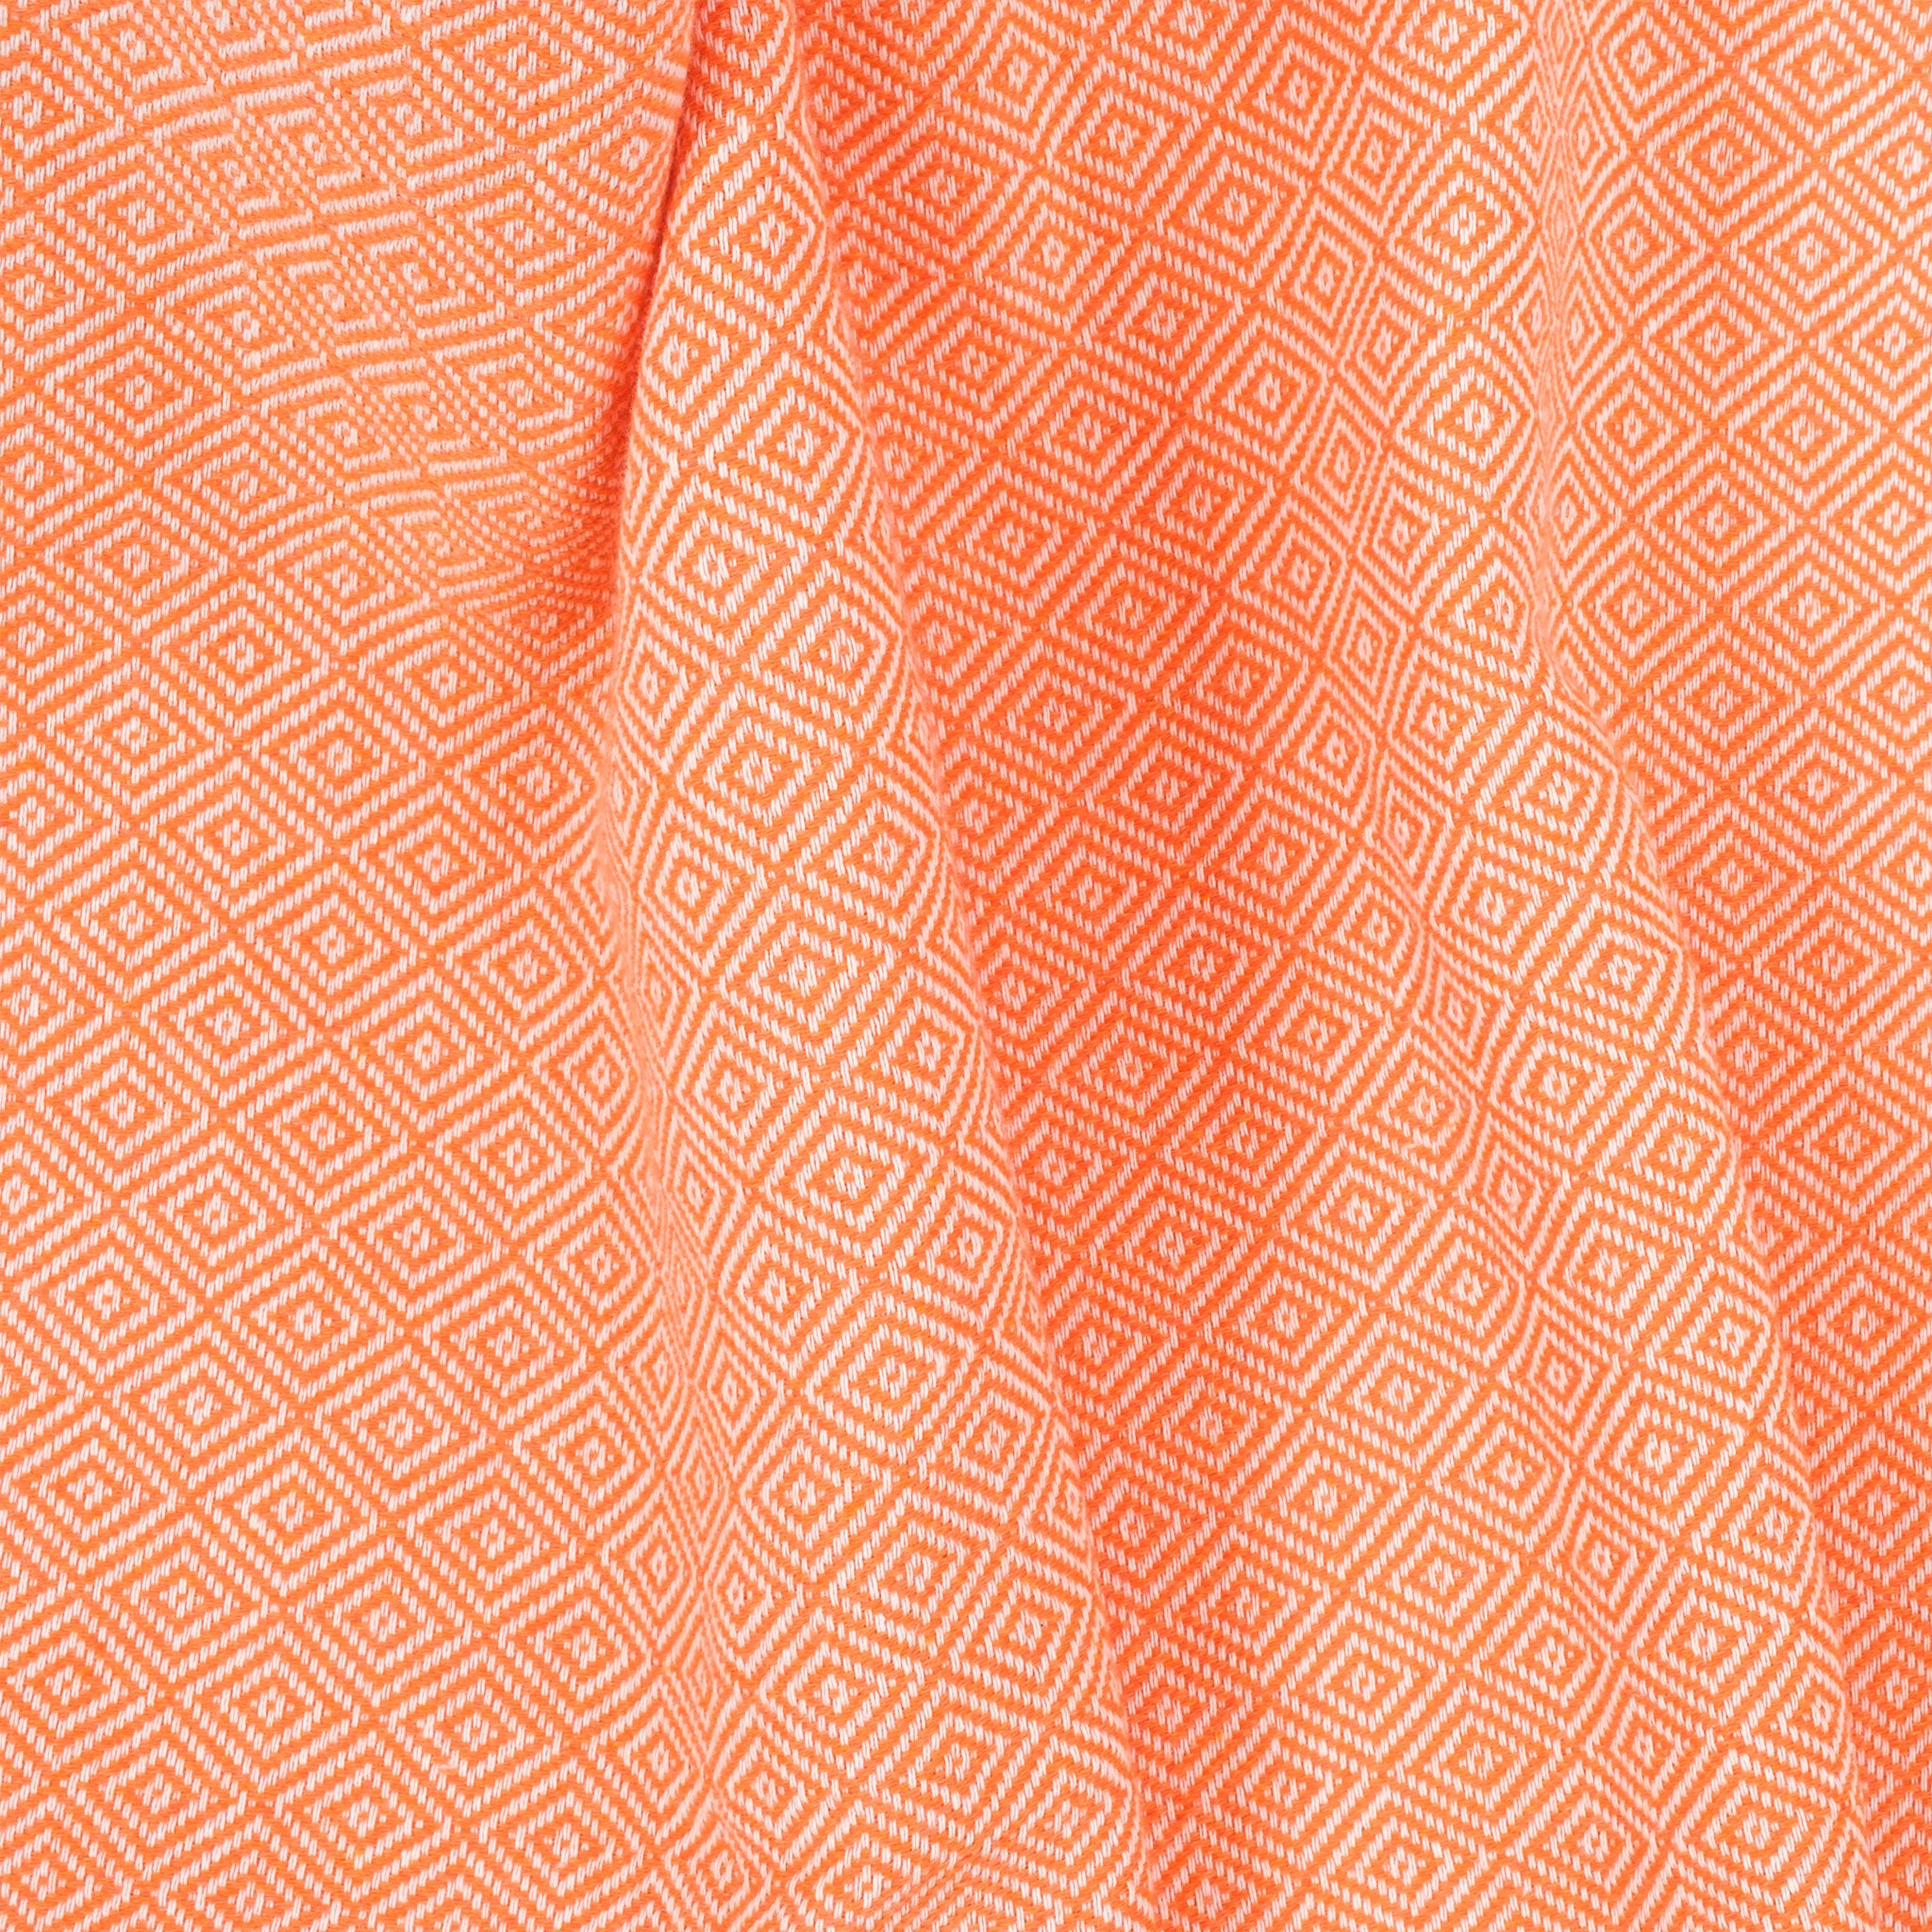 American Soft Linen - 100% Cotton Turkish Peshtemal Towels - 44 Set Case Pack - Orange - 2